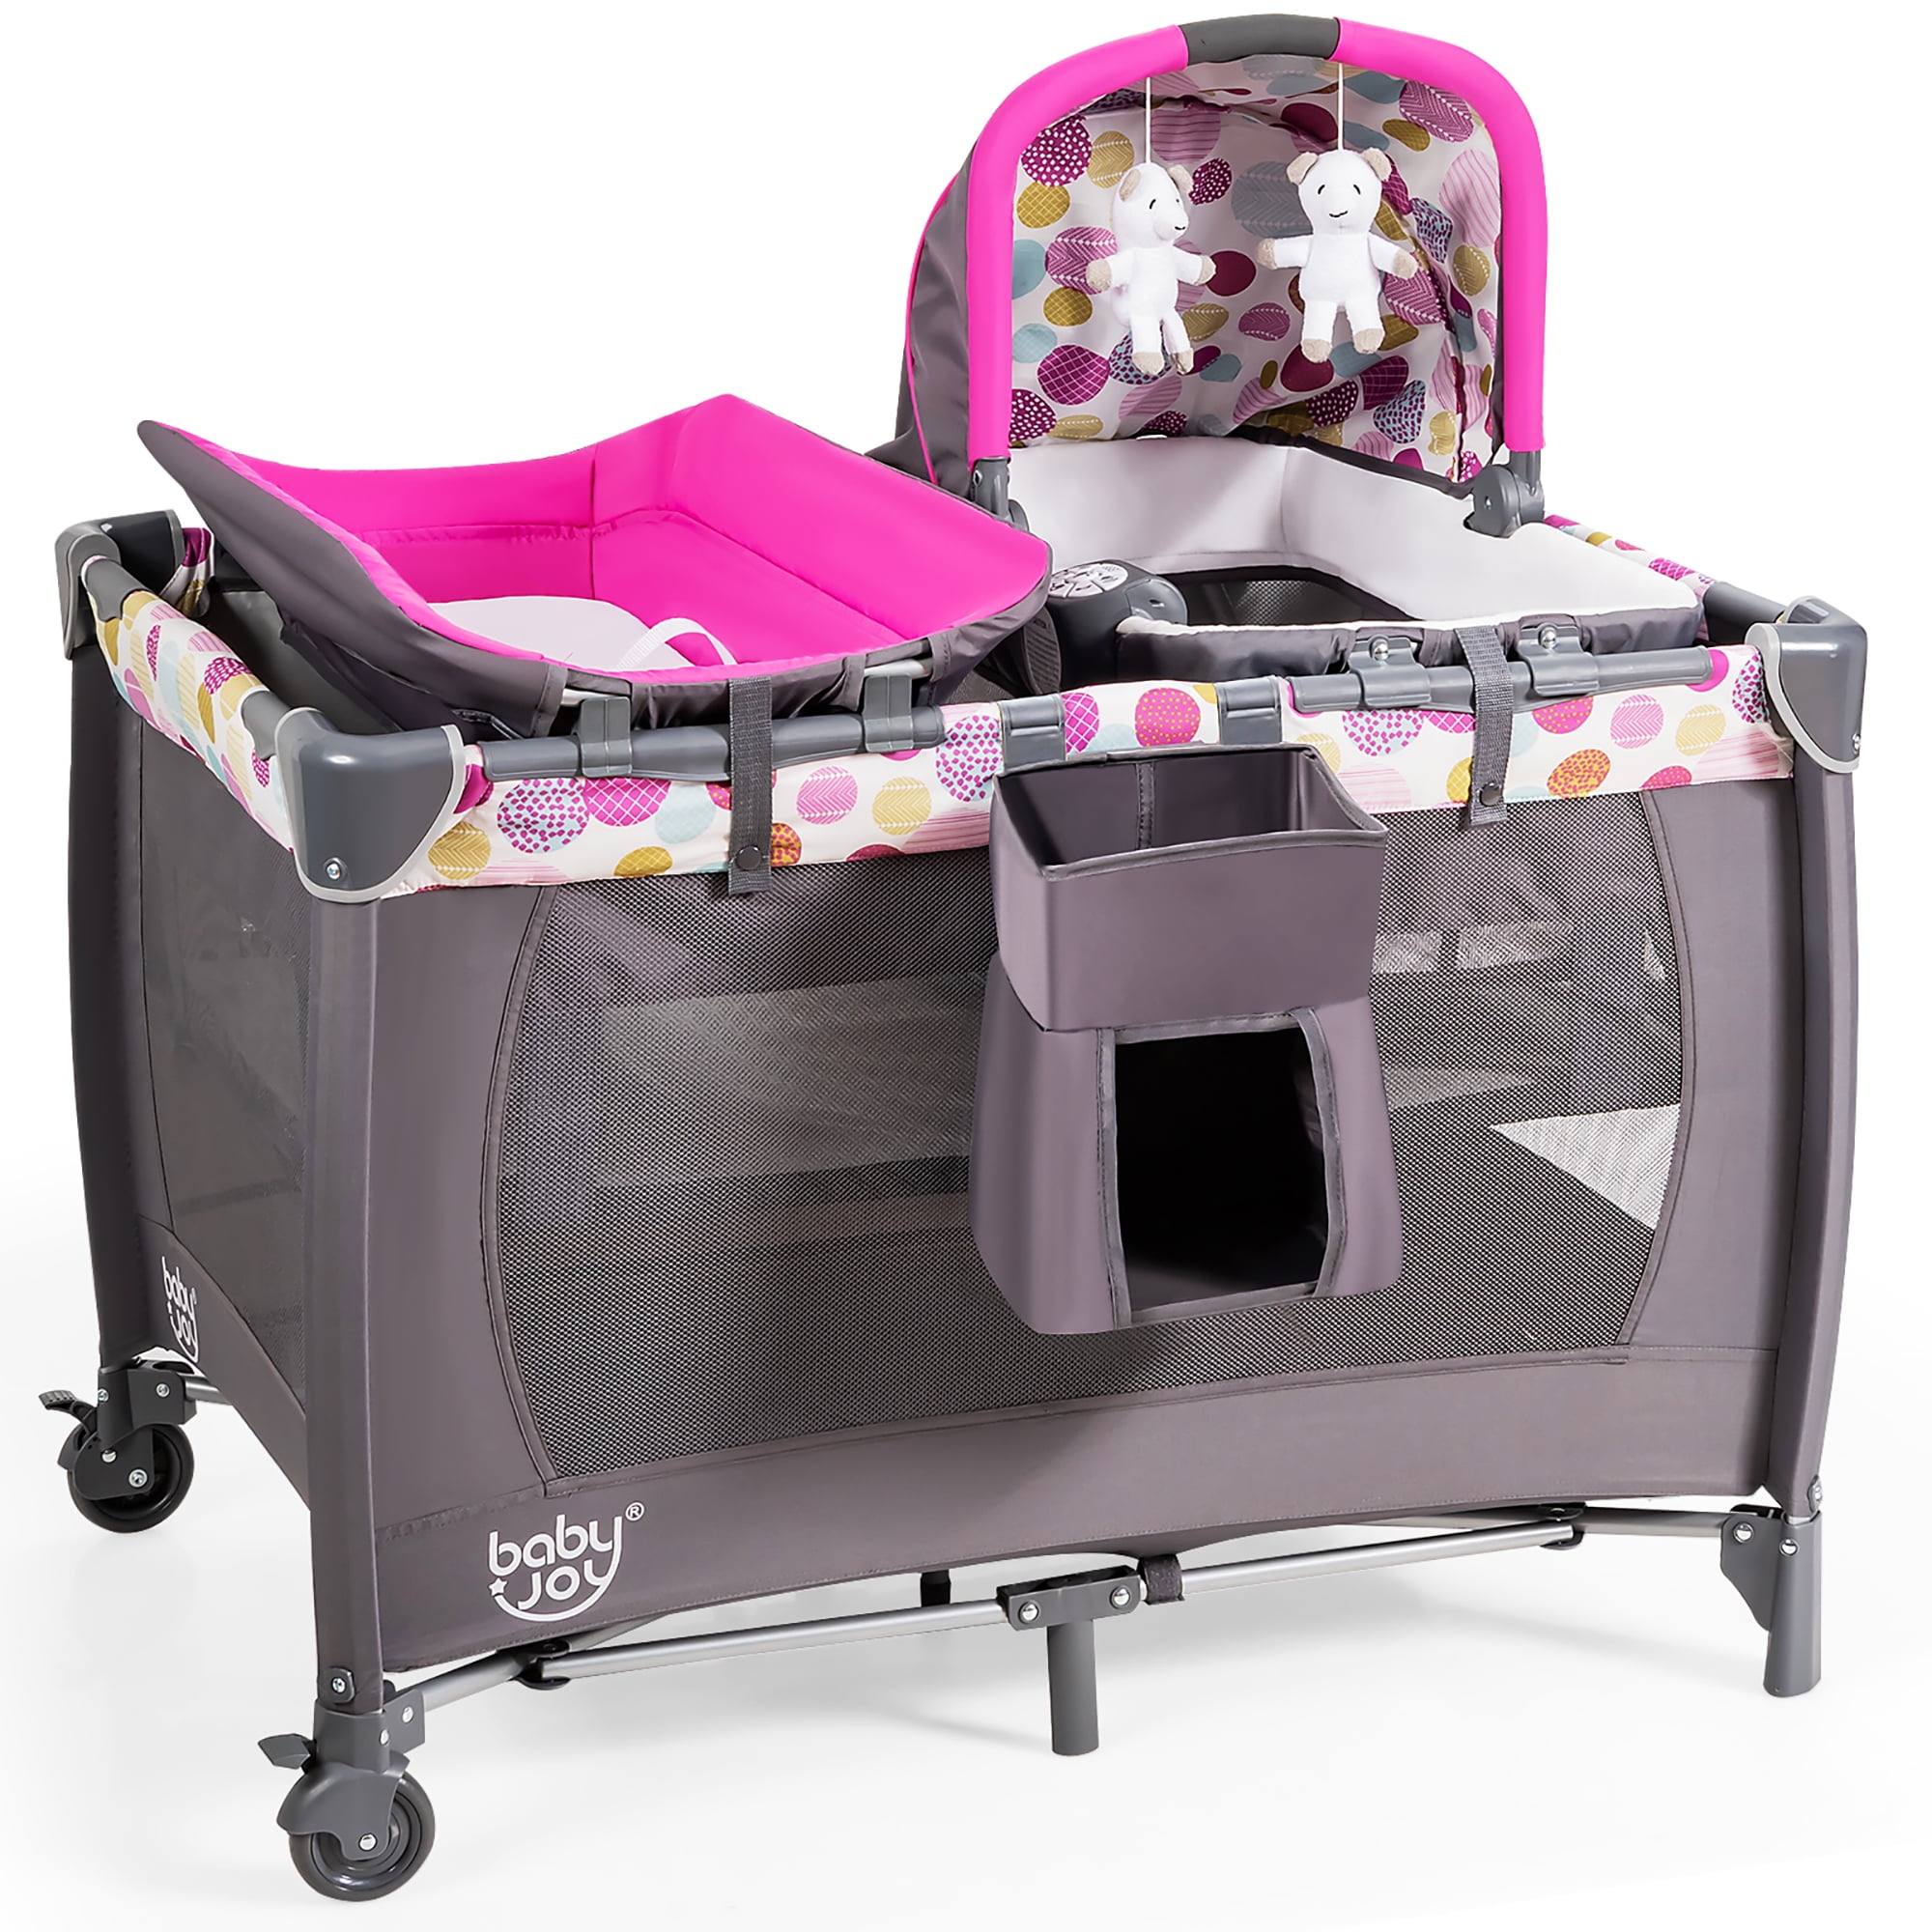 FUFU & GAGA Multifunctional Crib, Foldable Baby Bed Portable Play ...